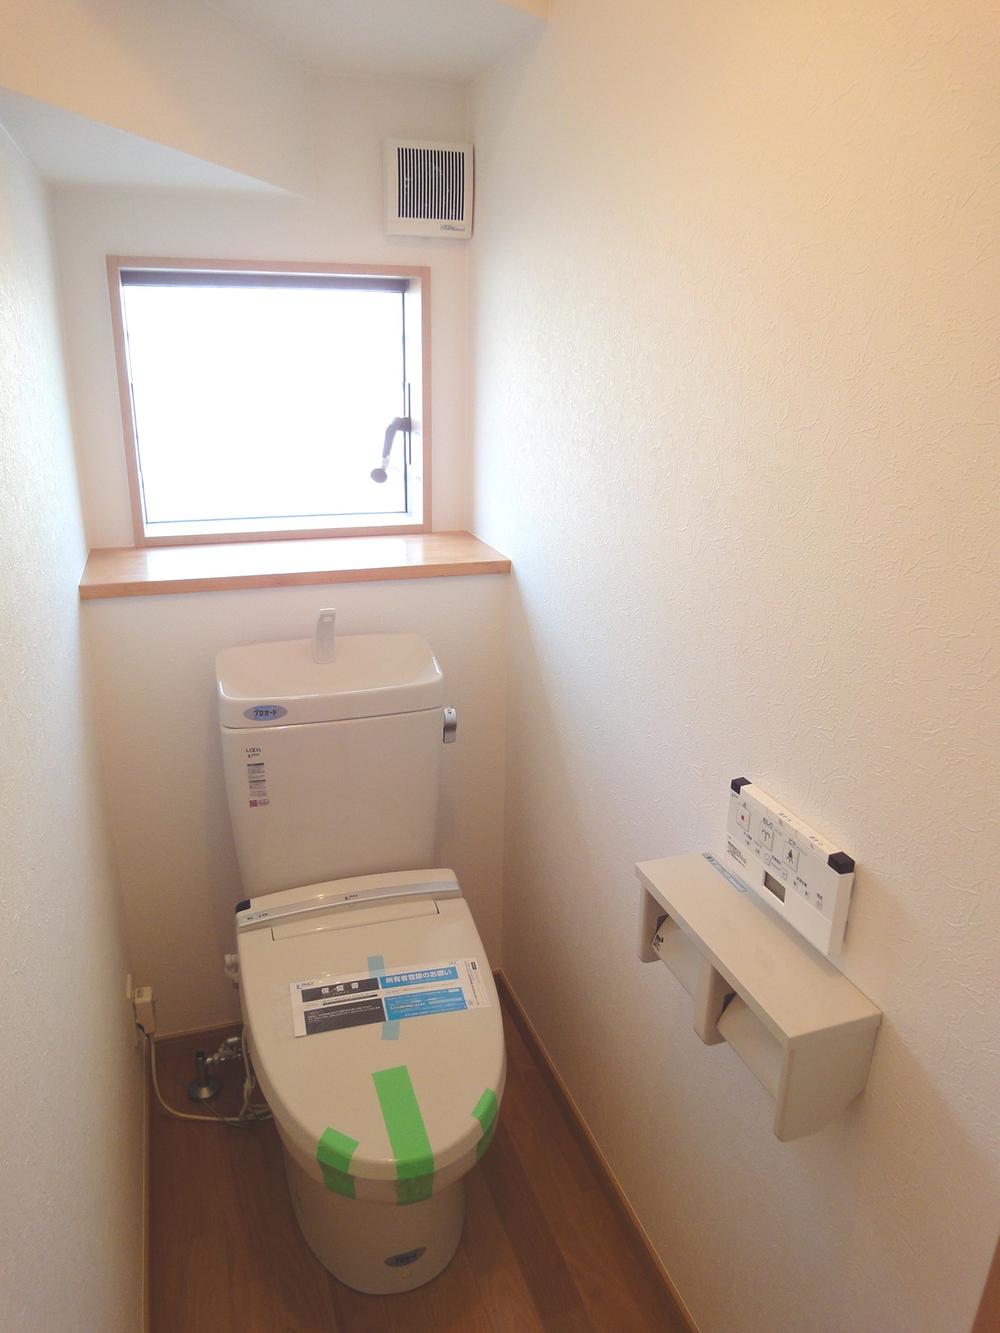 Toilet. First floor toilet (November 1, 2013) Shooting